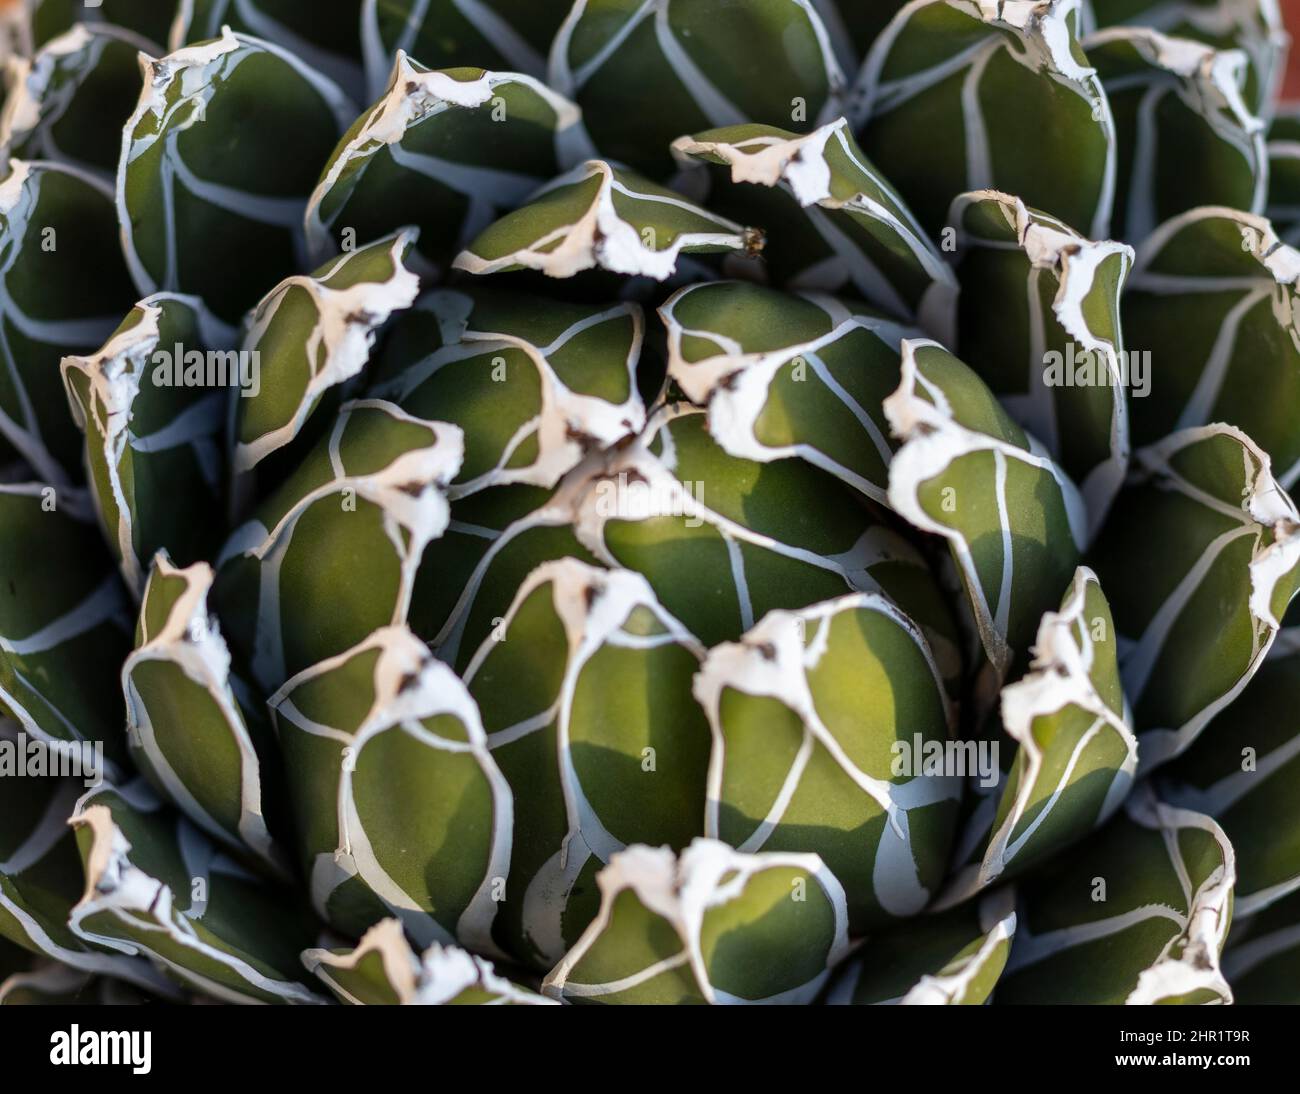 Agave victoria reginae geometrical funnel shape plant Stock Photo